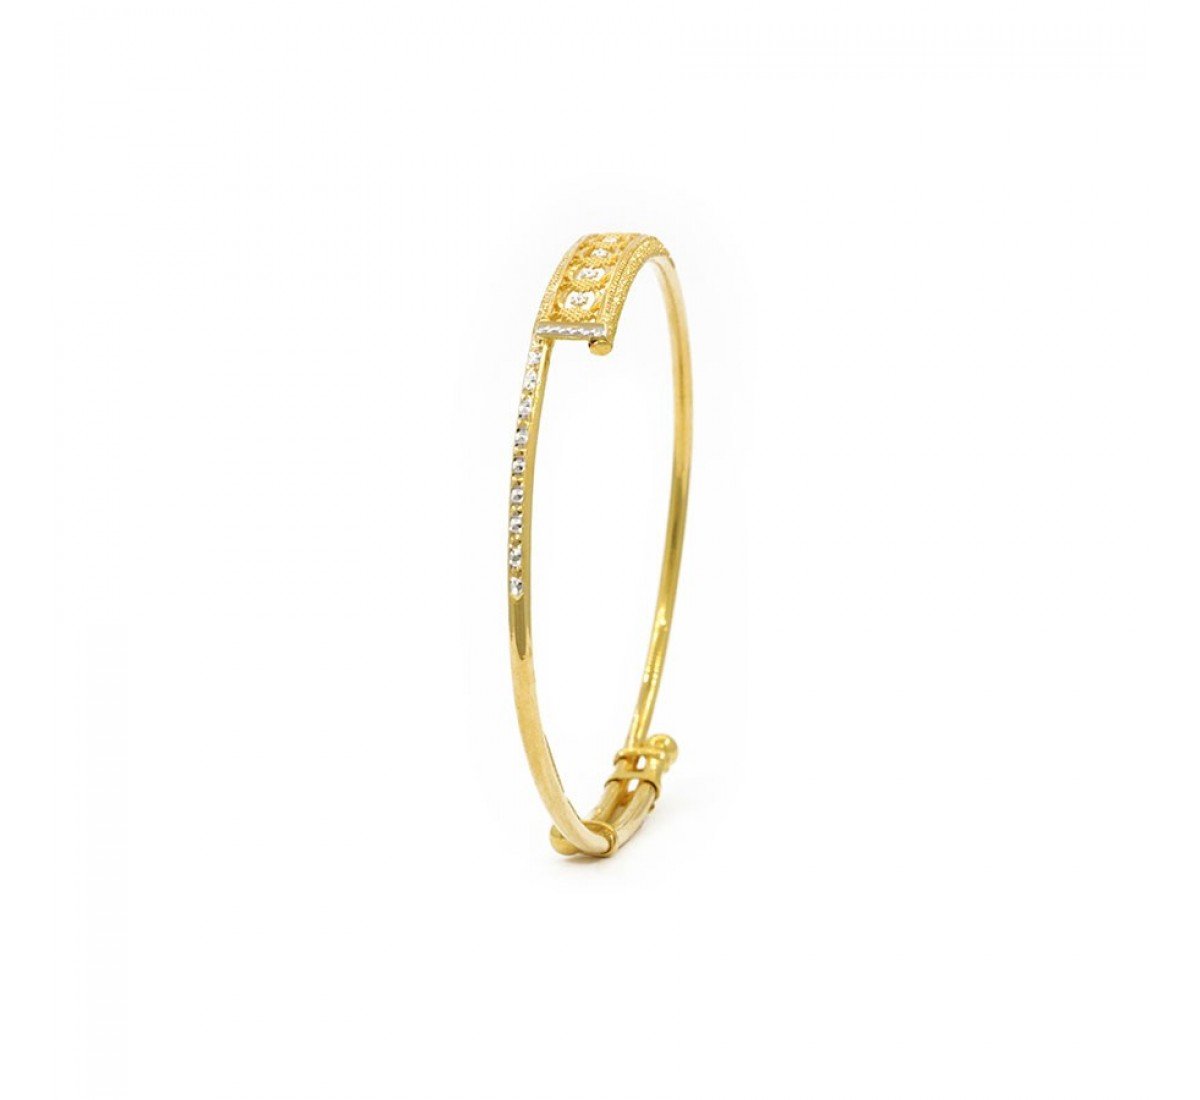 New Design Trend Jewelry Waterproof Ring| Alibaba.com